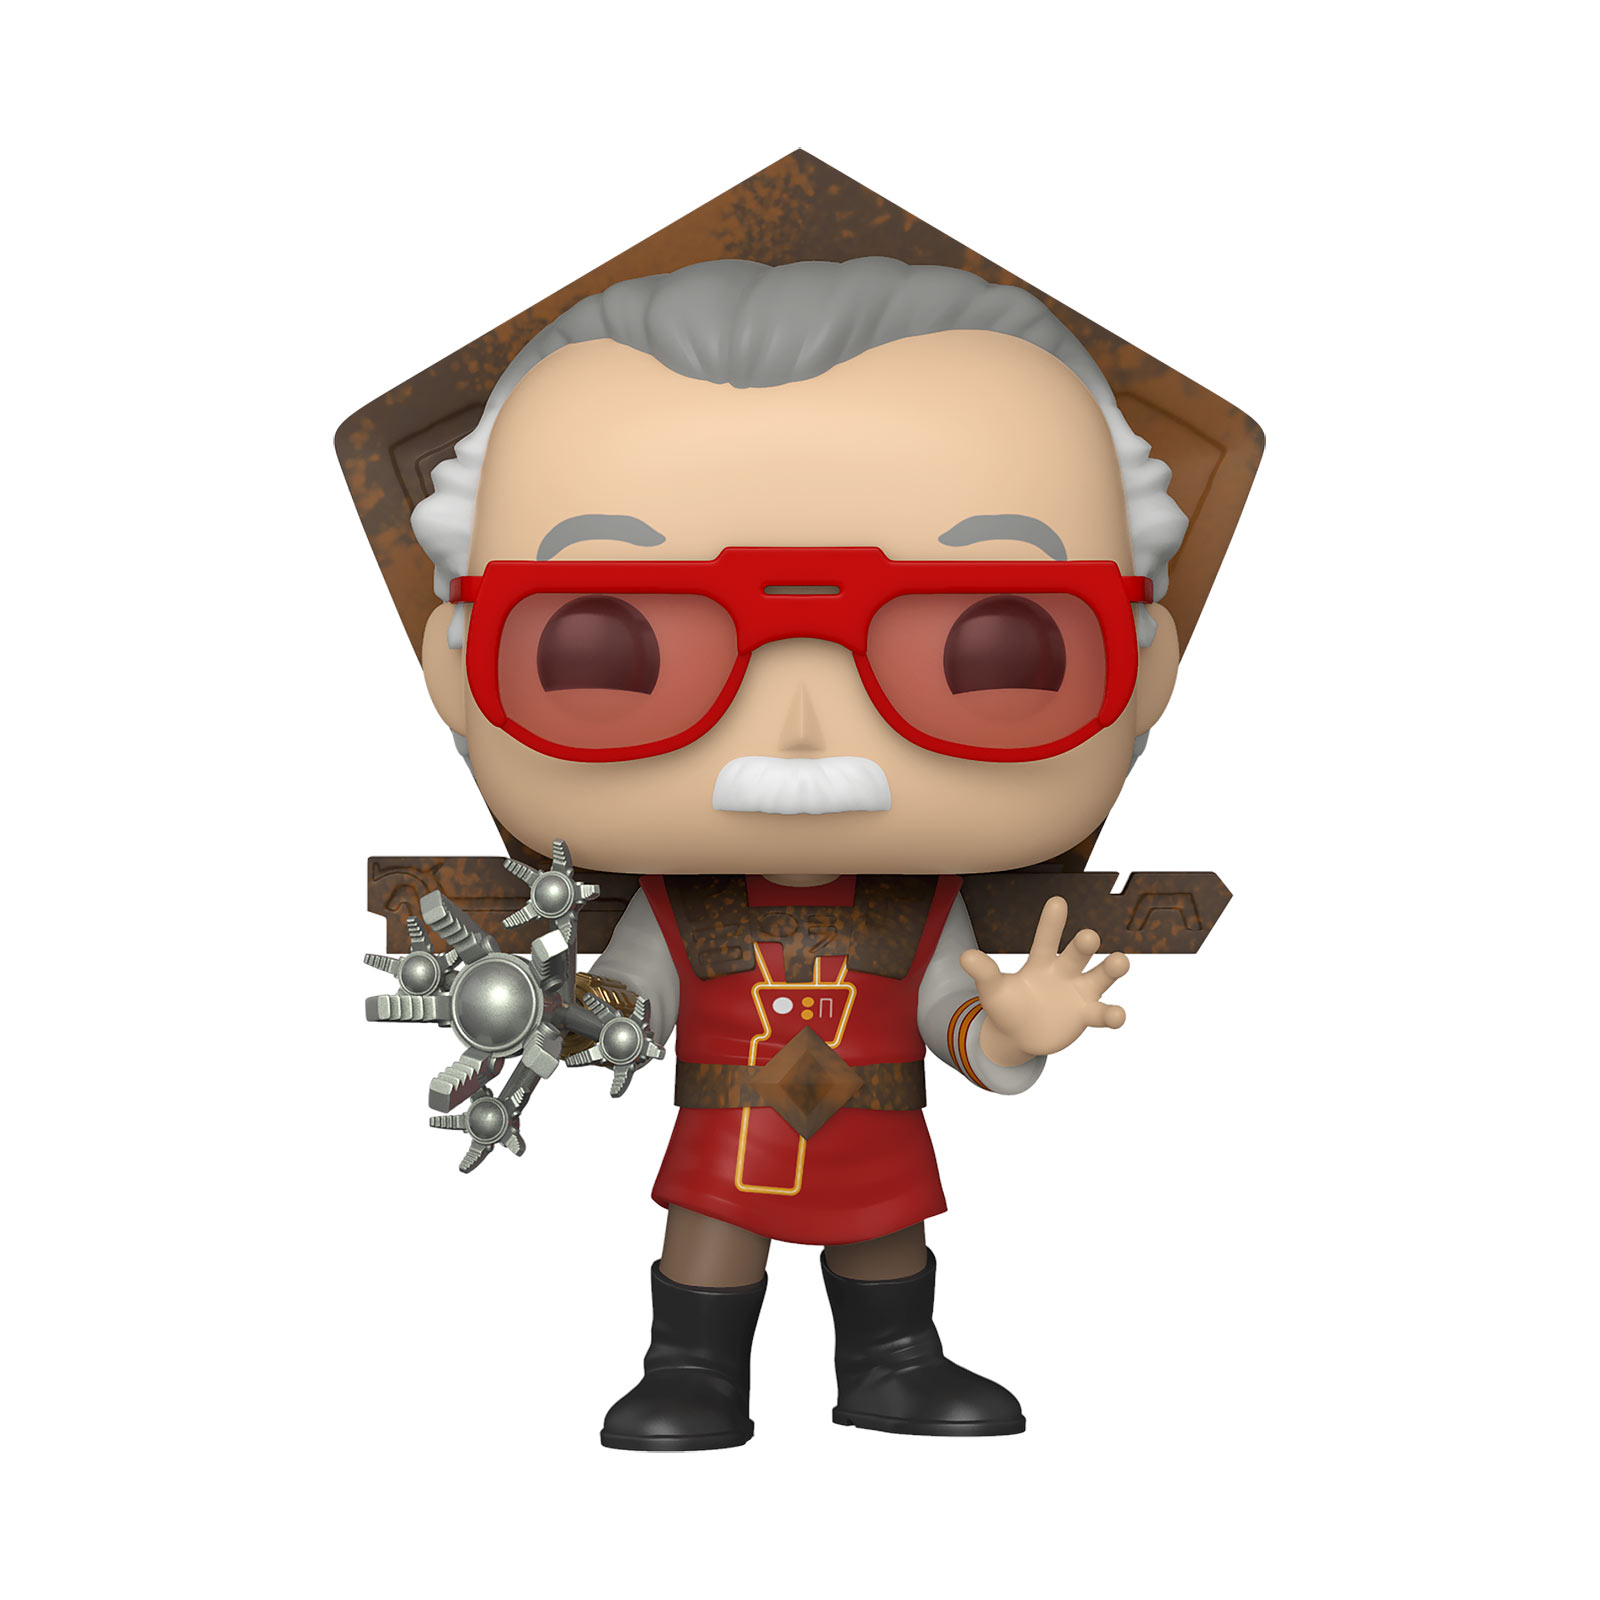 Thor - Stan Lee in Ragnarok Outfit Funko Pop Bobblehead Figure